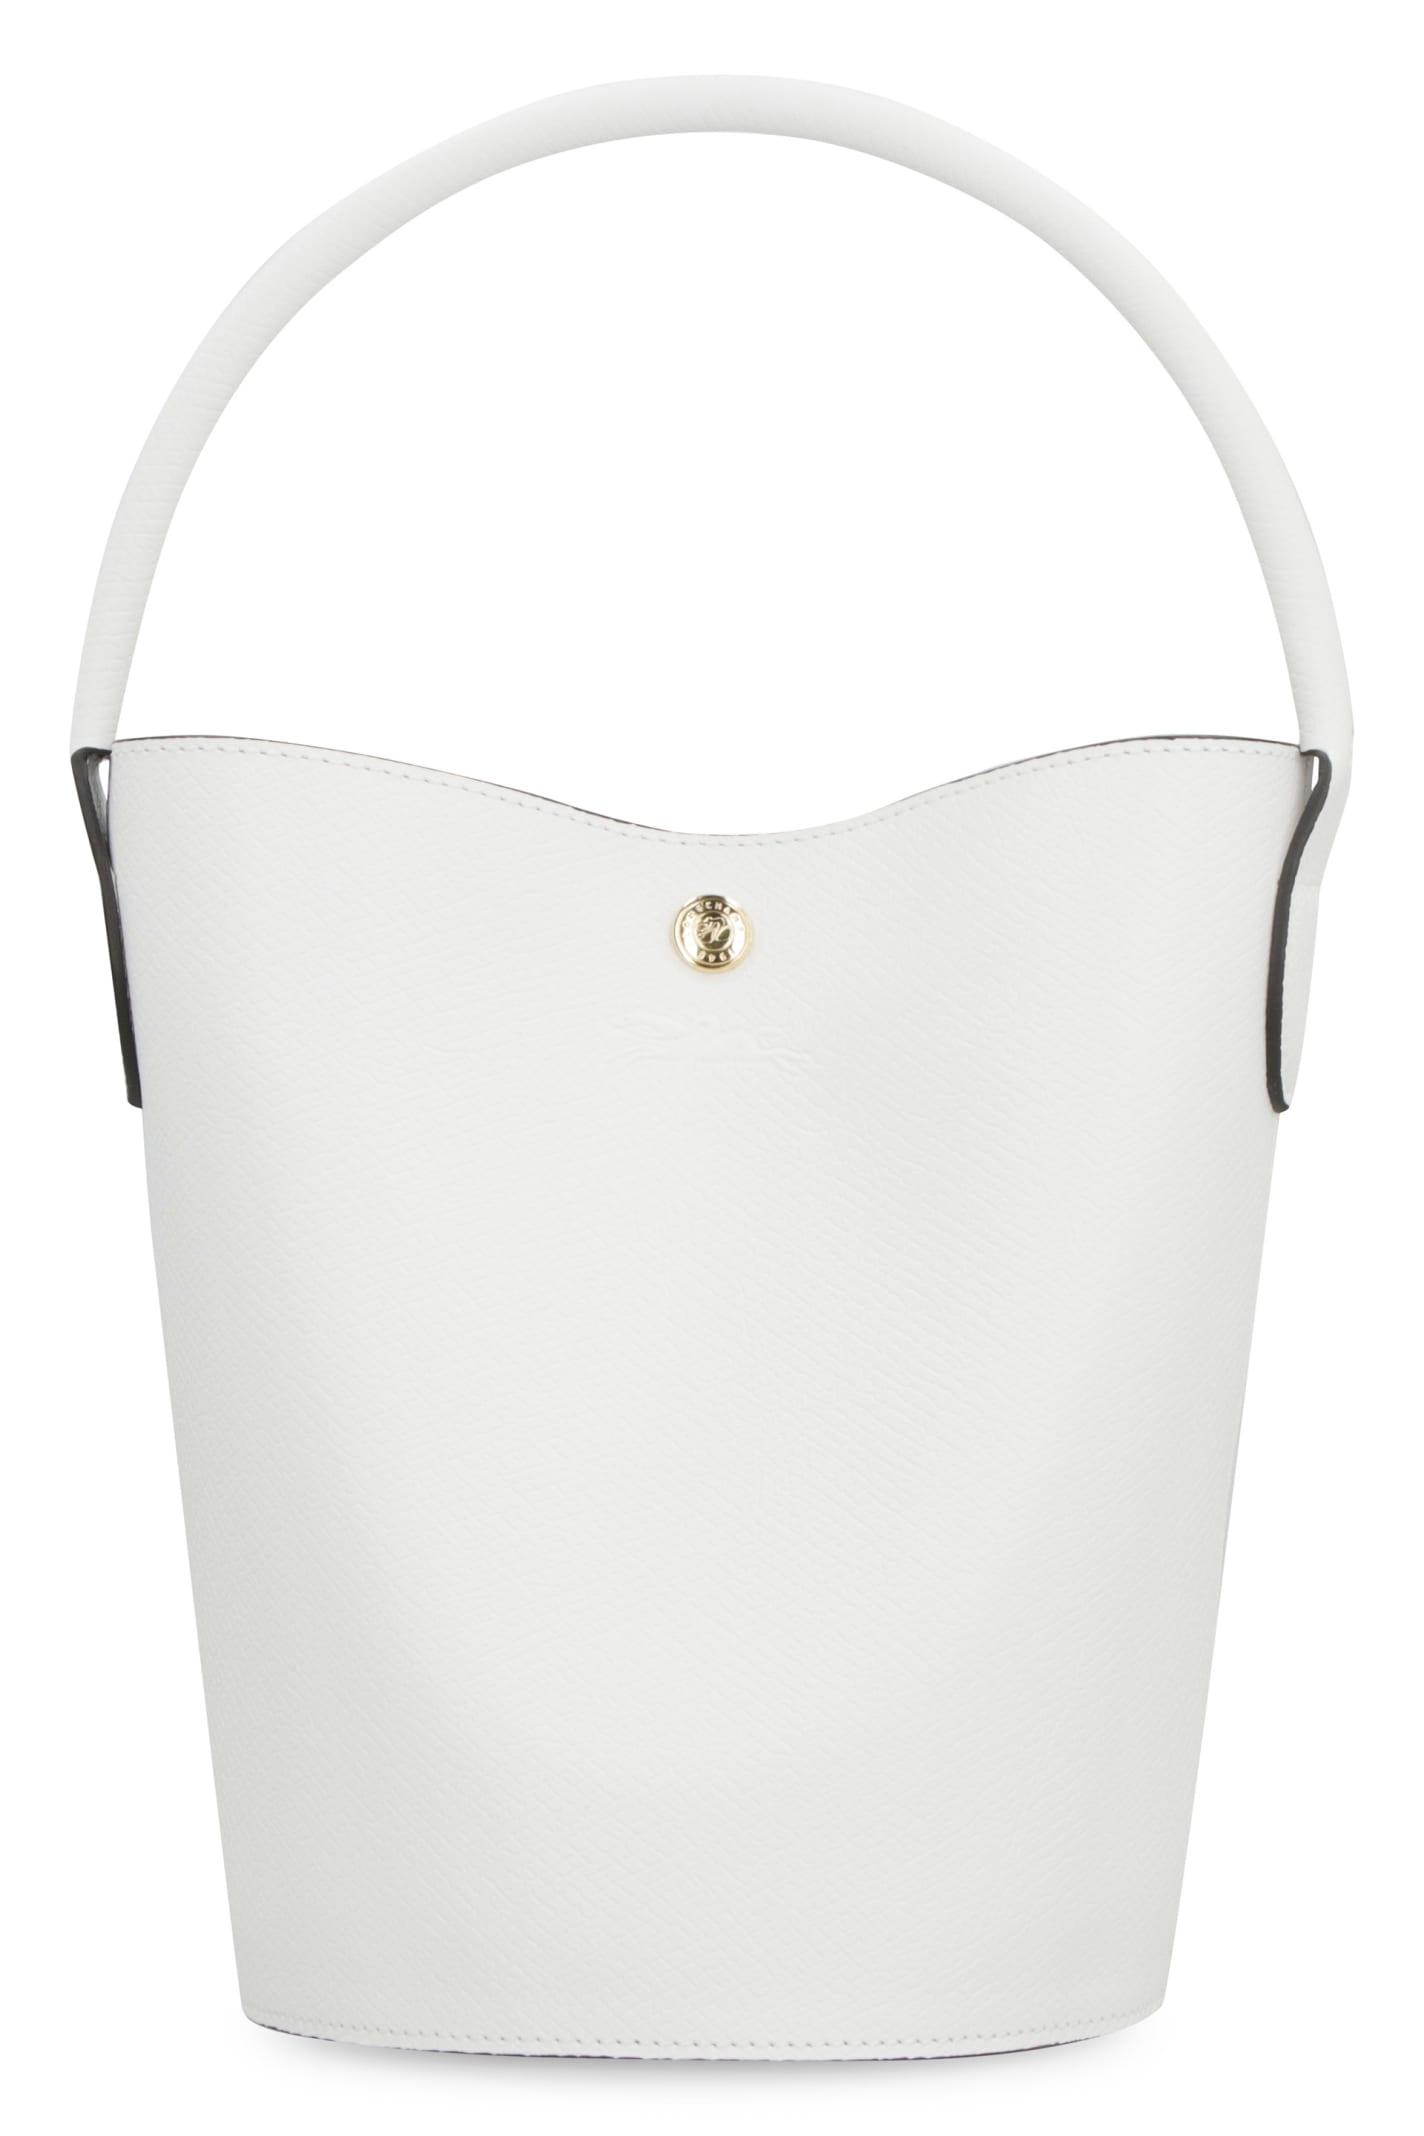 Longchamp Le Pliage Filet Top Handle Bag, Ecru at John Lewis & Partners